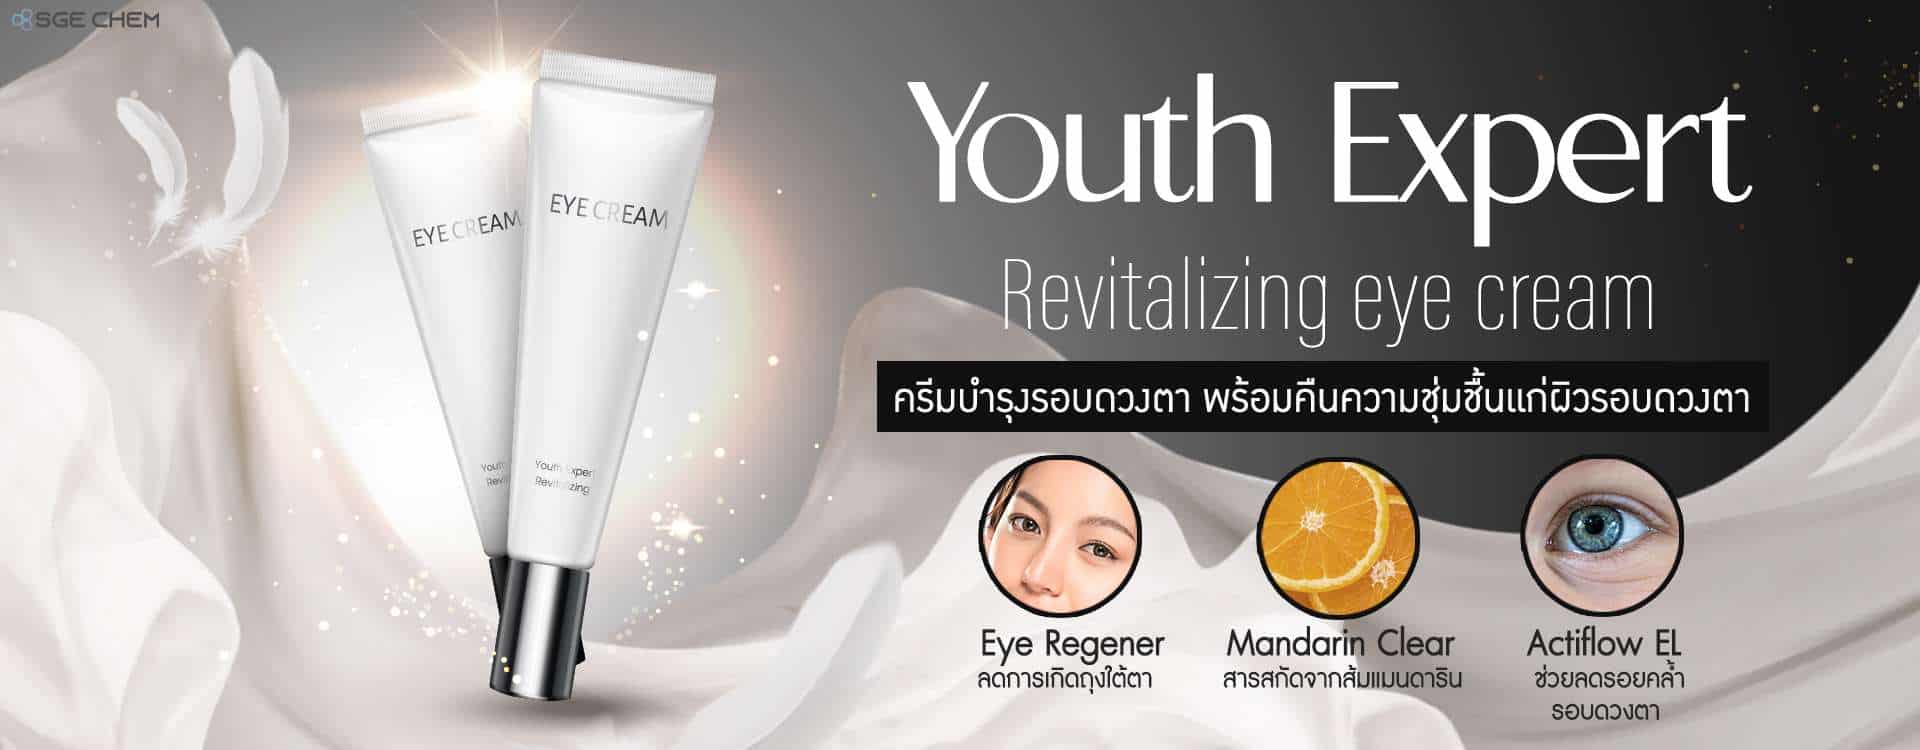 Youth Expert Revitalizing Eye Cream